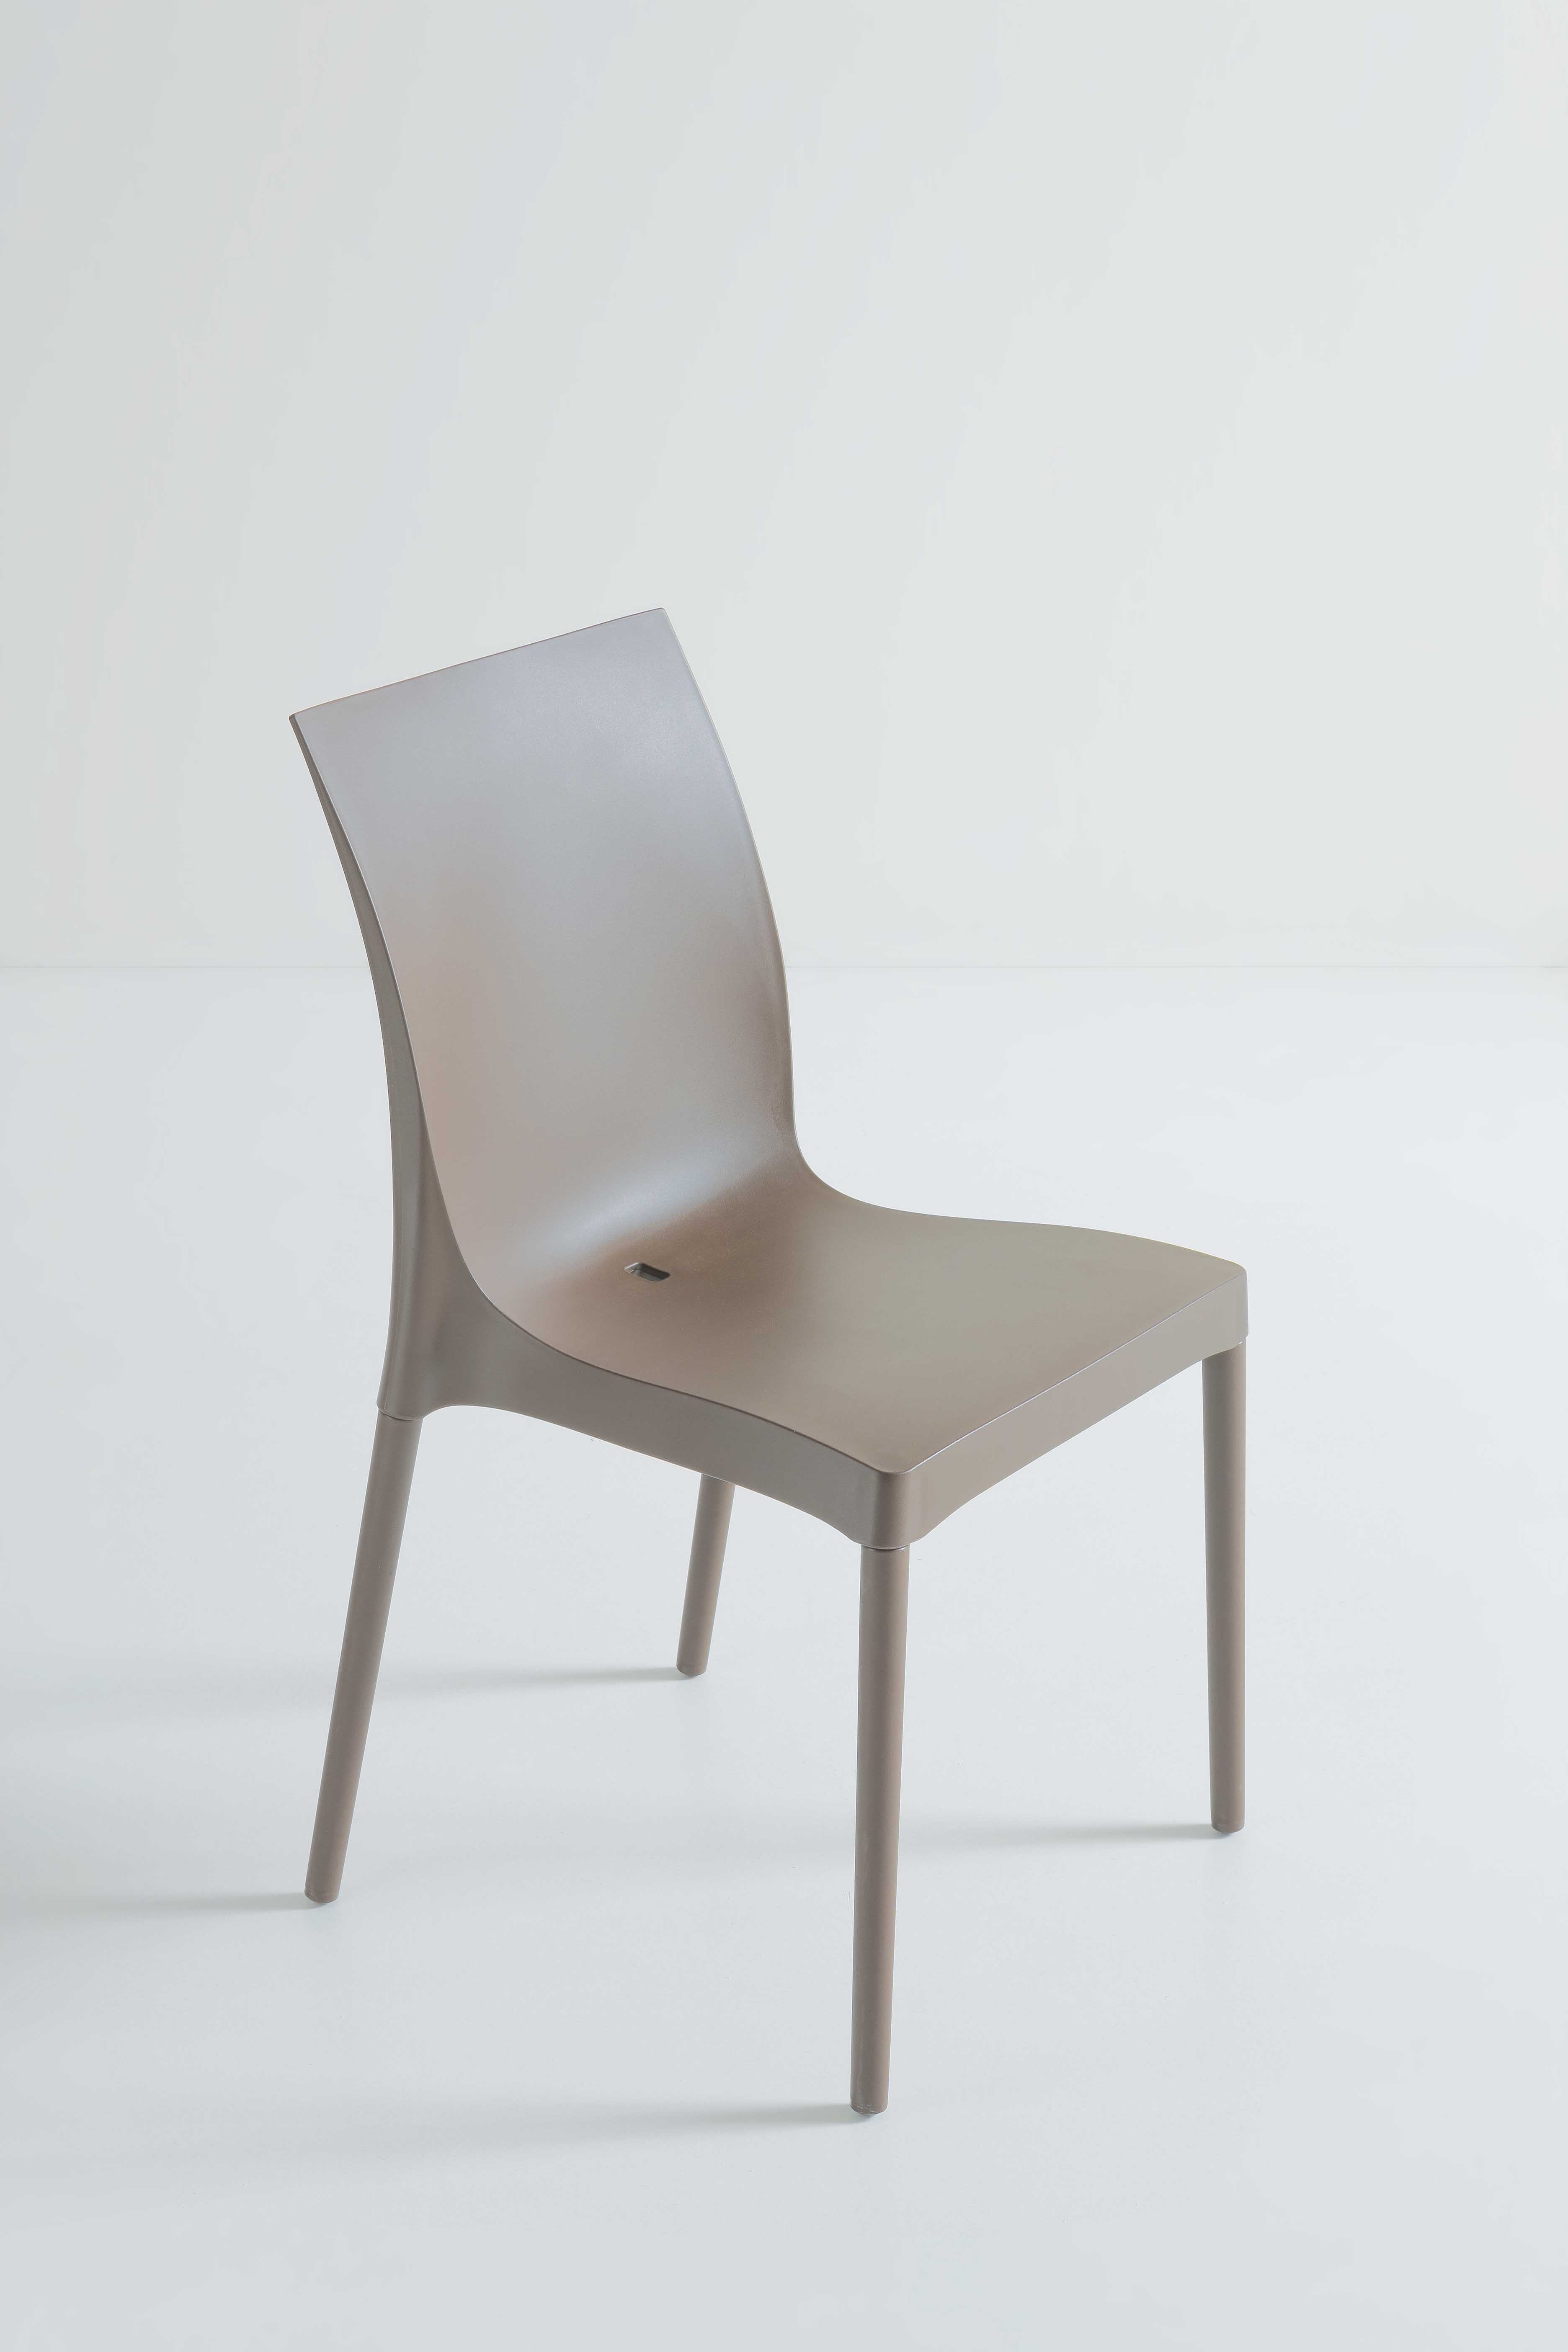 Gaber Iris Gartenstuhl - stapelbar - Metall mit Kunststoff Sitzschale